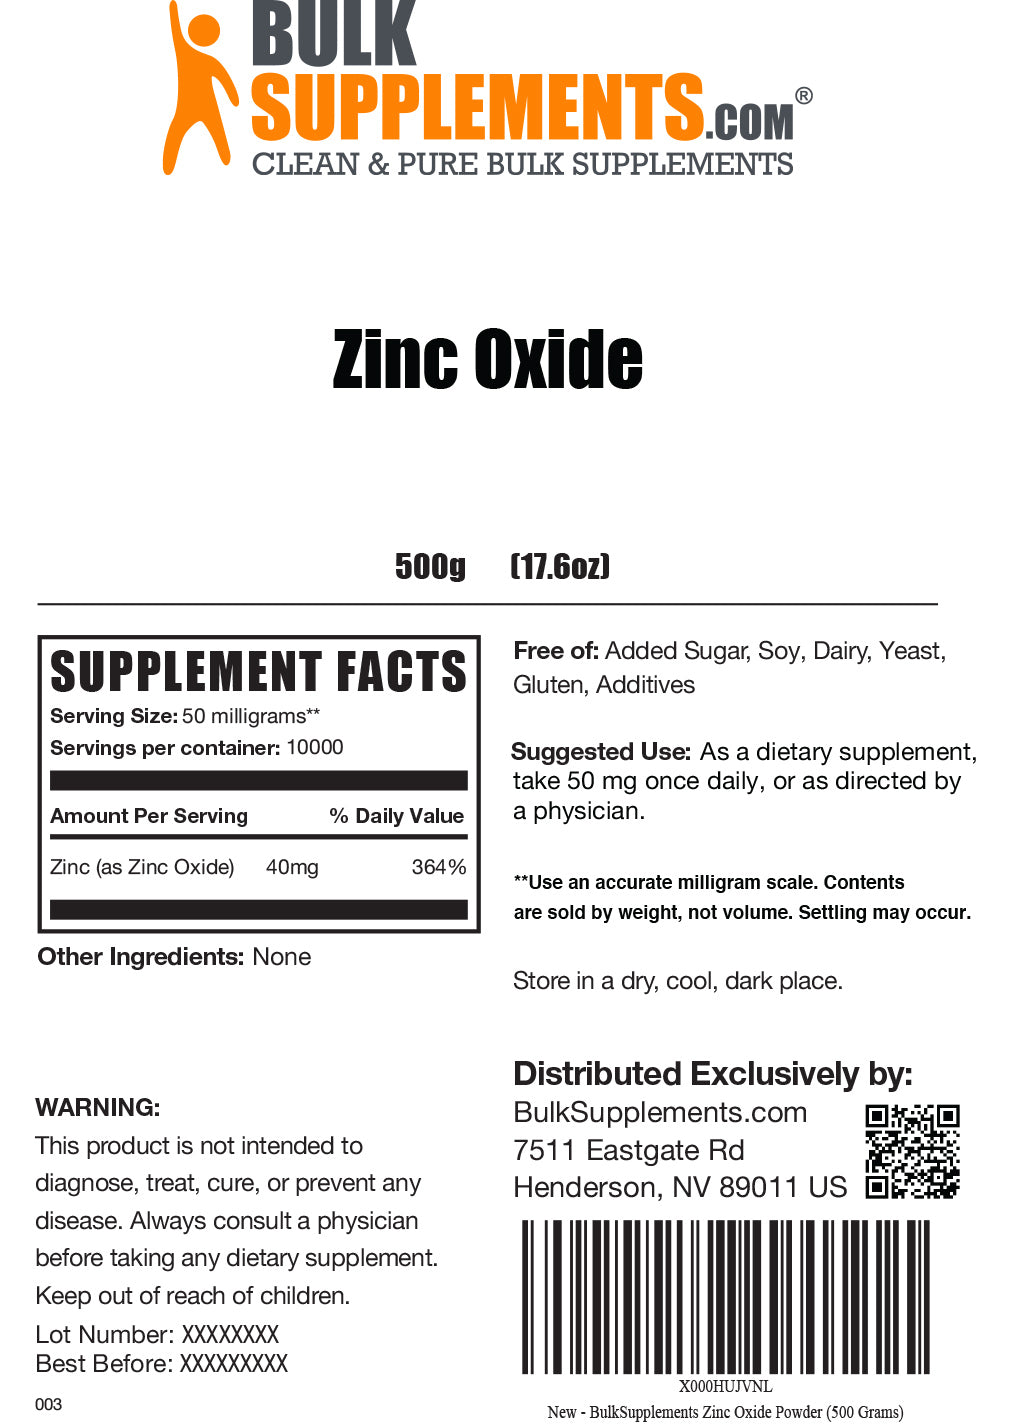 Zinc oxide powder label 500g